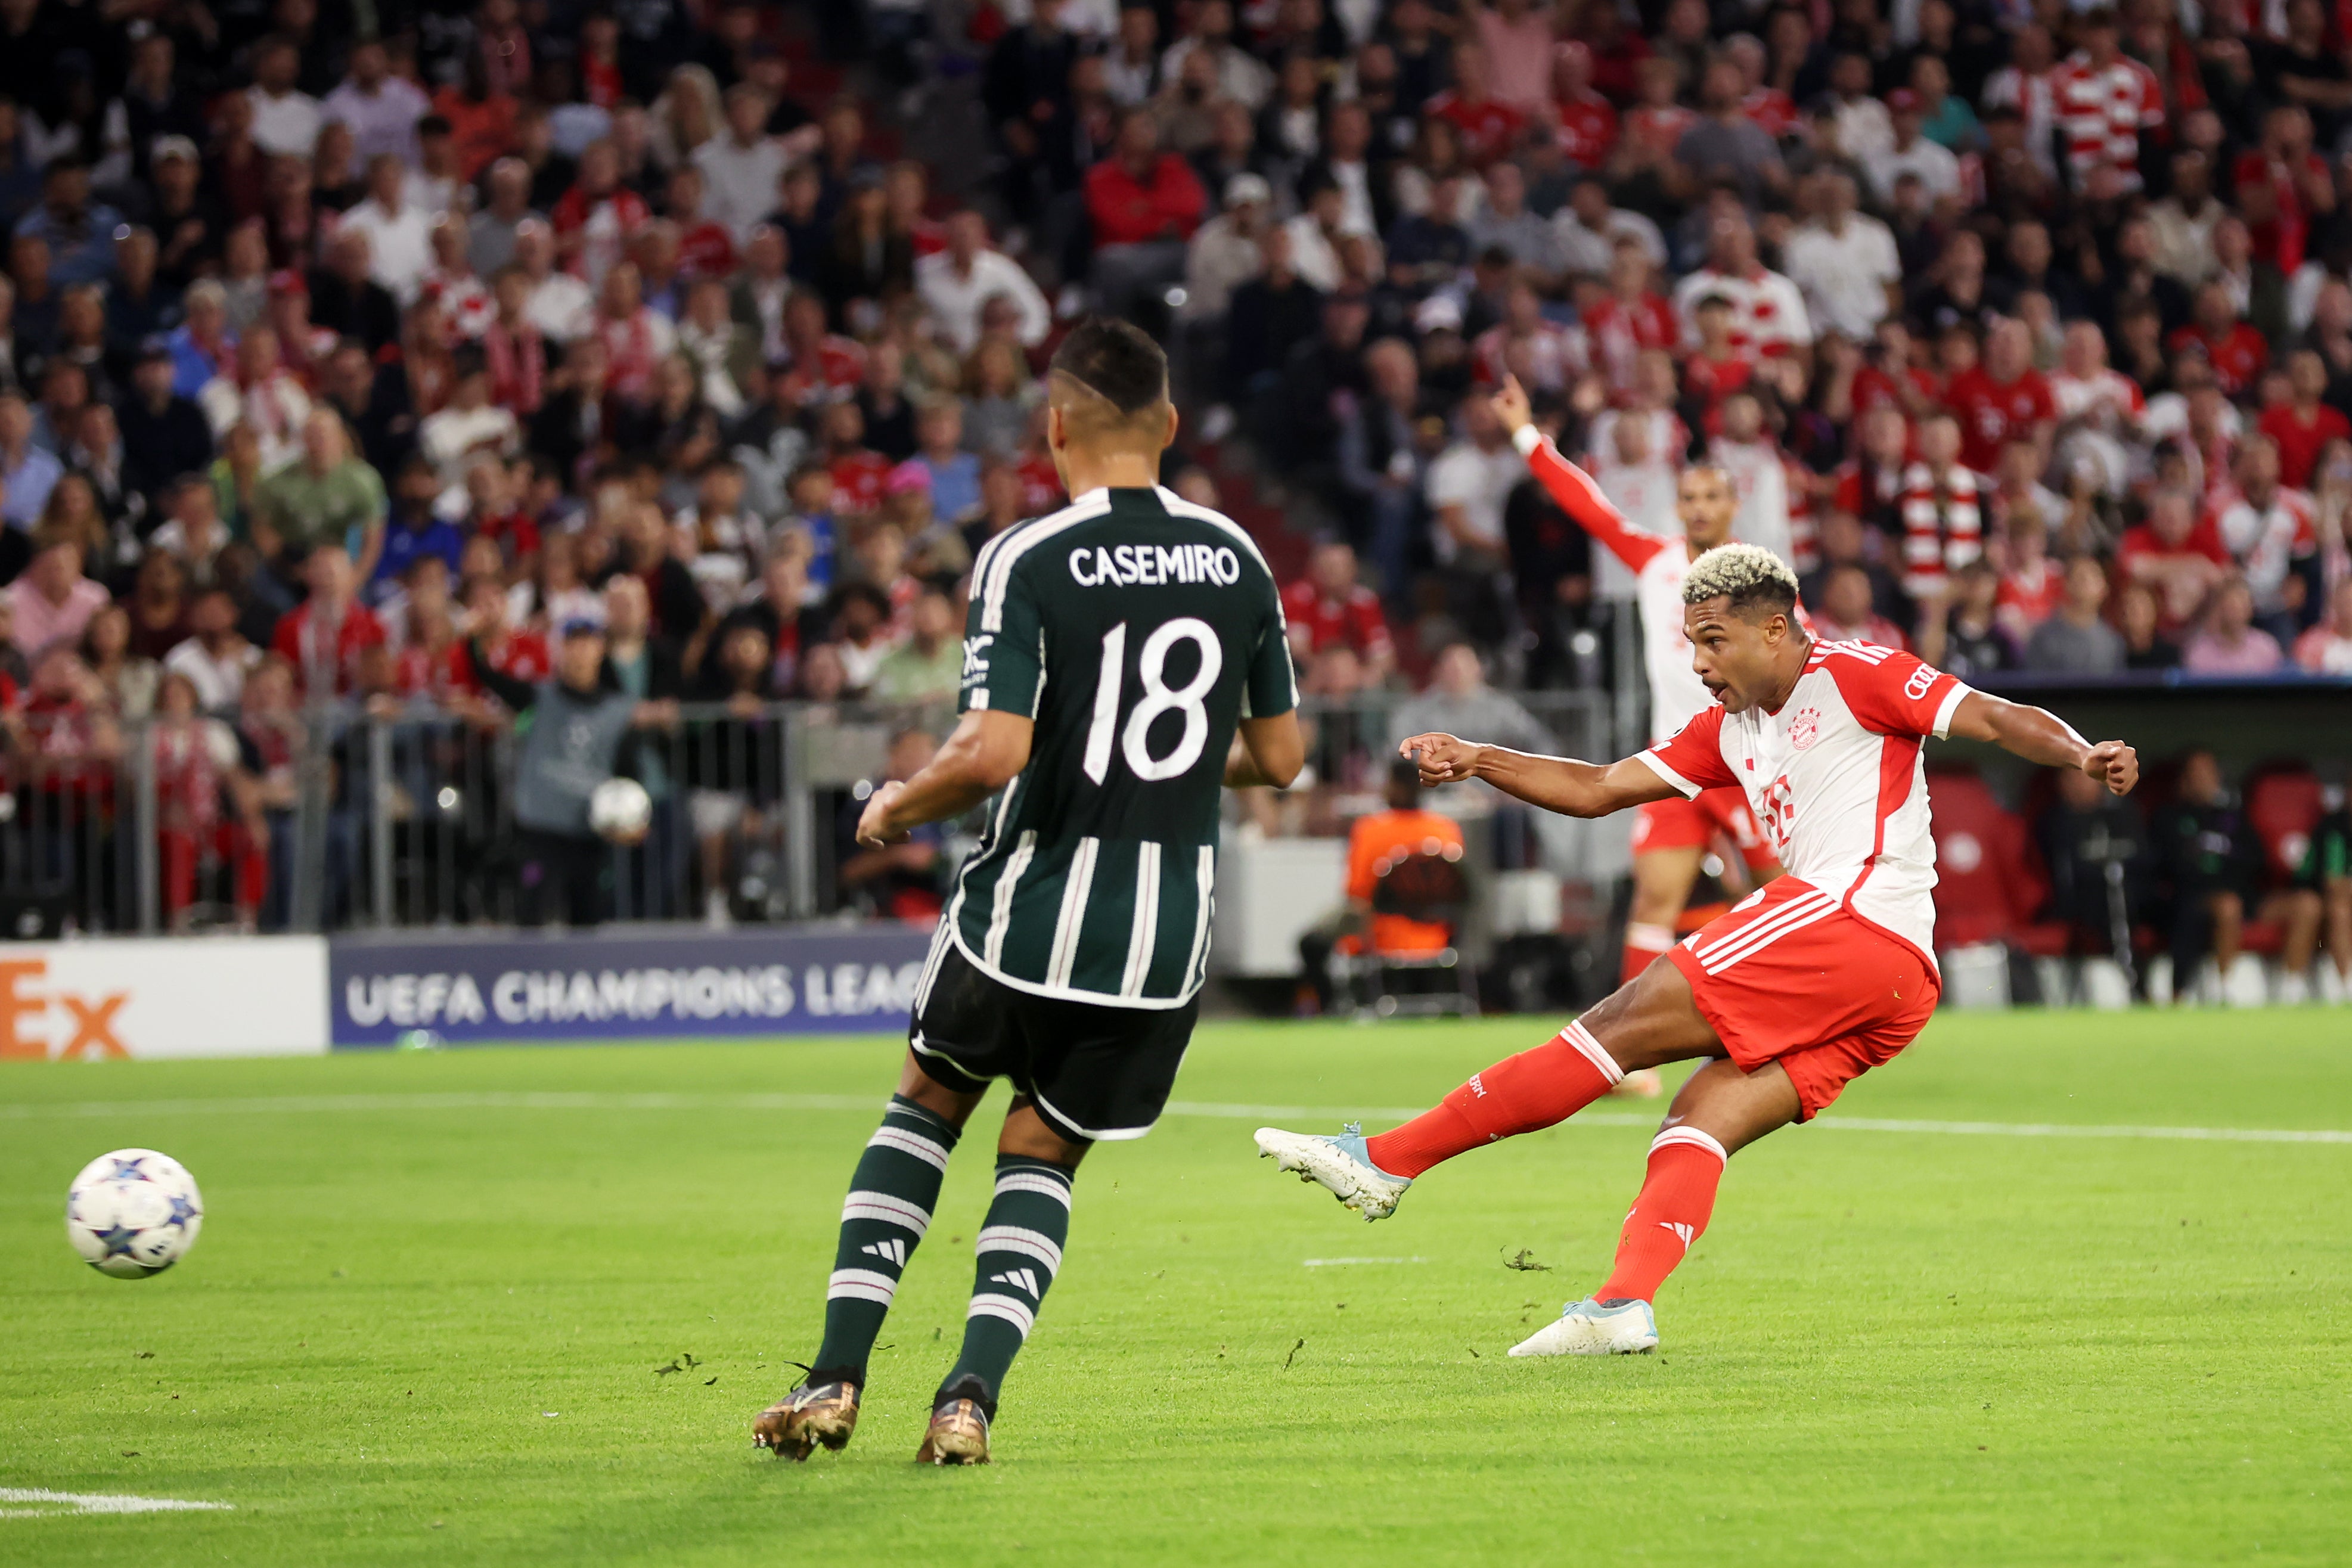 Leroy Sane scored Bayern’s second goal after Jamal Musiala’s individual set-up